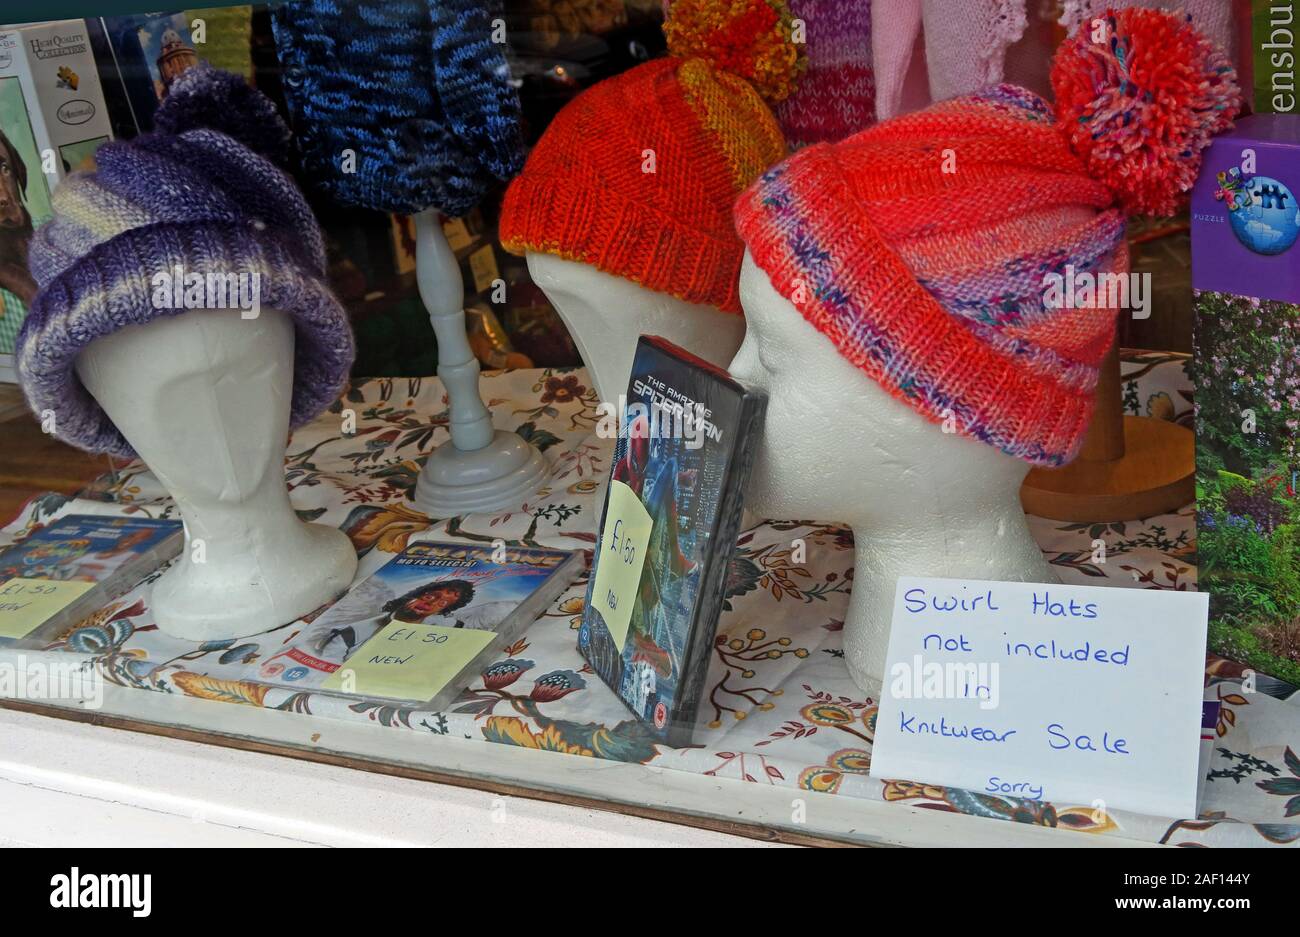 Knitwear, in Charity Shop, Eastover, Bridgwater,Swirl Hats,not included,in knitwear Sale,Somerset,England,UK Stock Photo